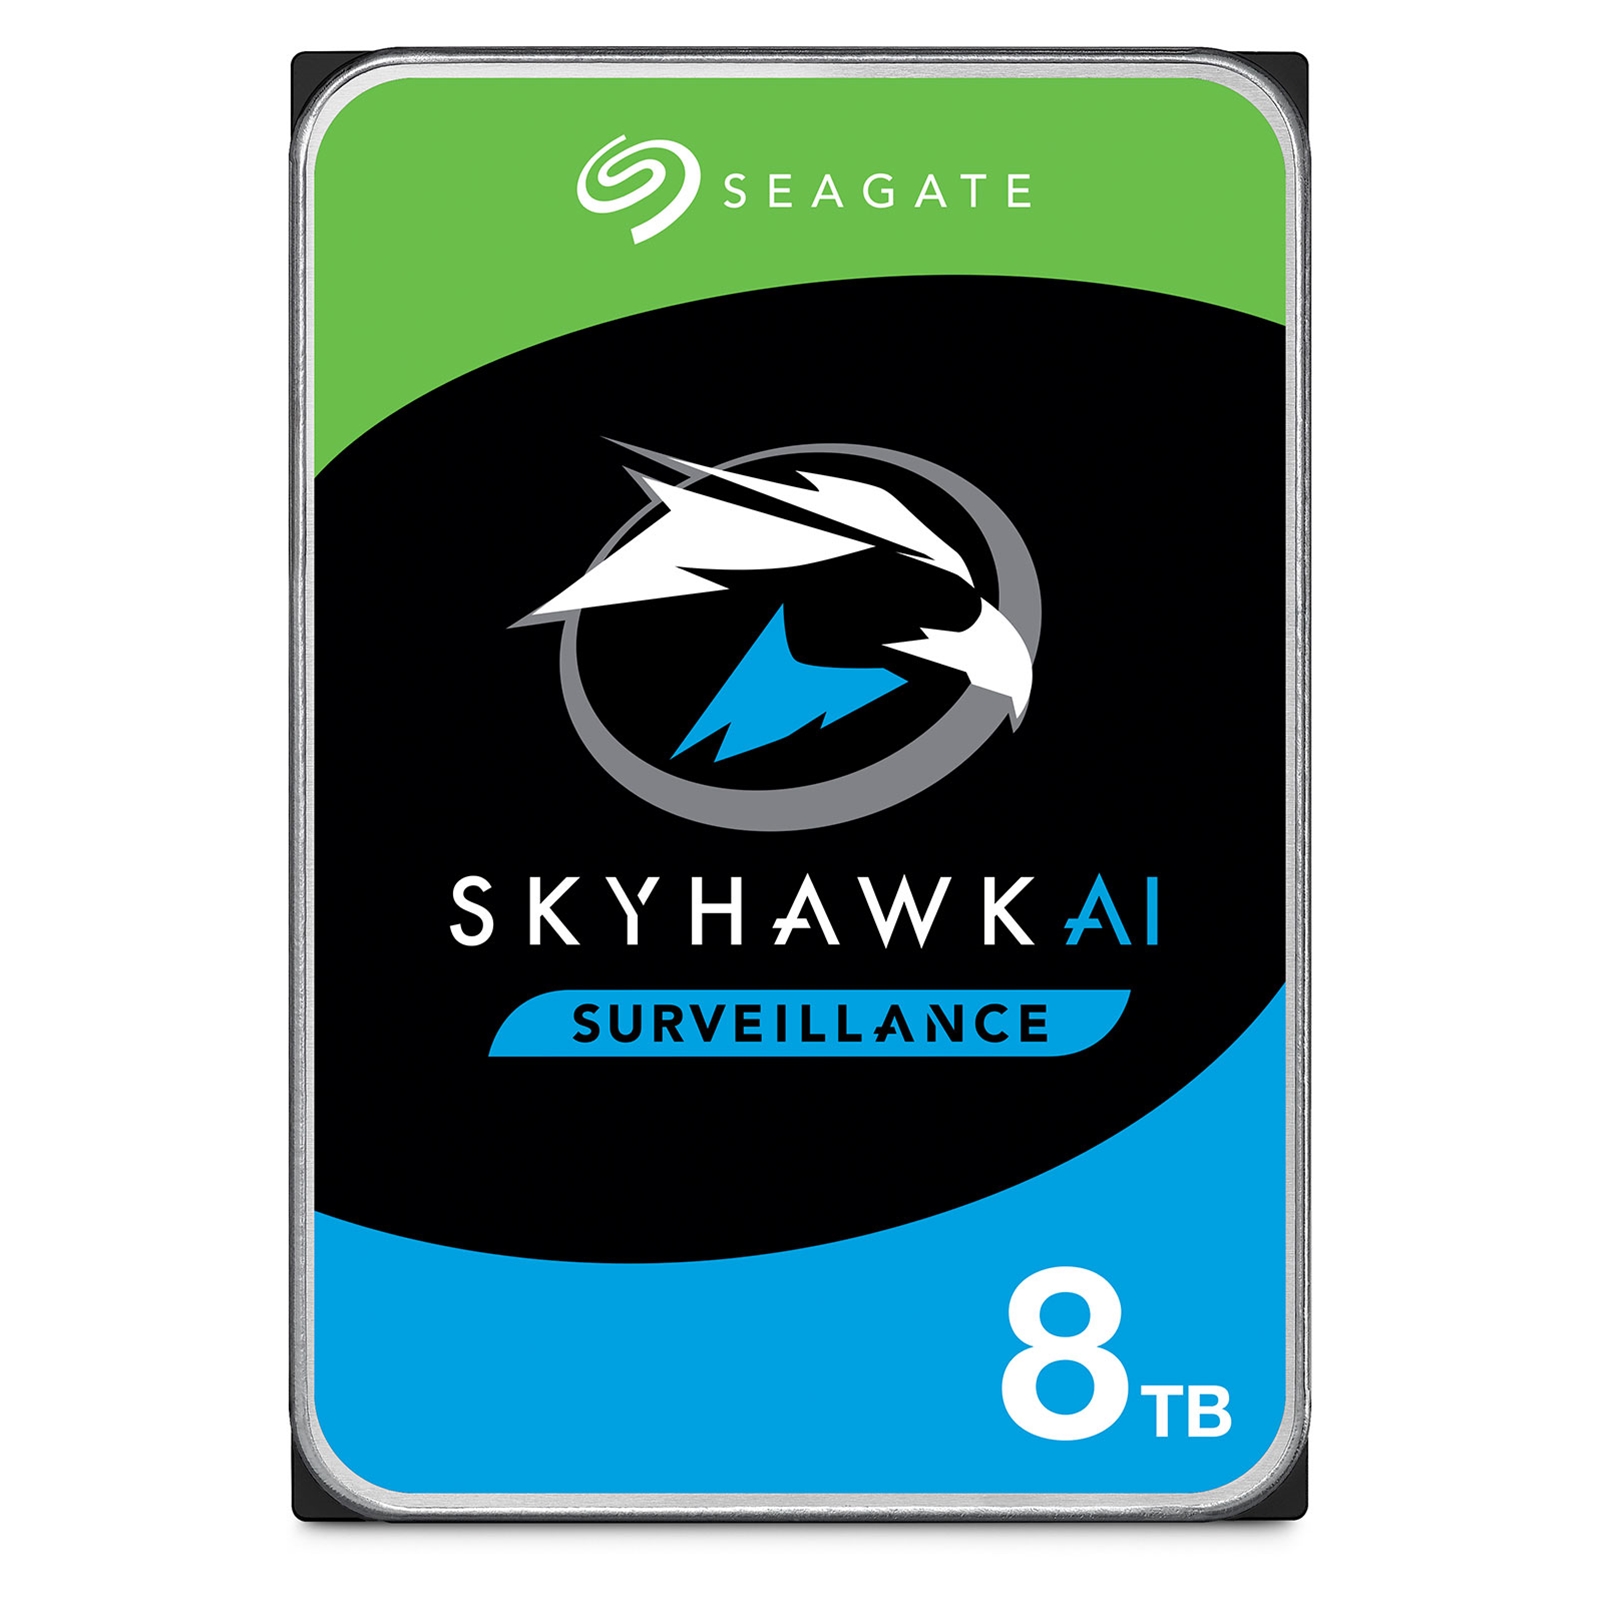 Seagate SkyHawk Surveillance ST8000VX004 8TB 3.5'' 7200RPM 256MB Cache SATA III Internal Hard Drive